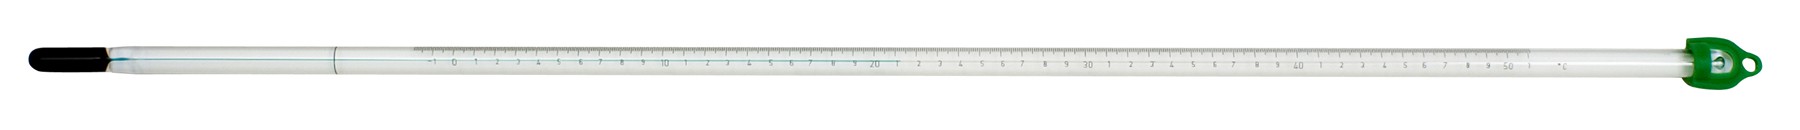 H-B DURAC Plus Precision Liquid-In-Glass Thermometer; 30 to 394F, Total Immersion, Organic Liquid Fill